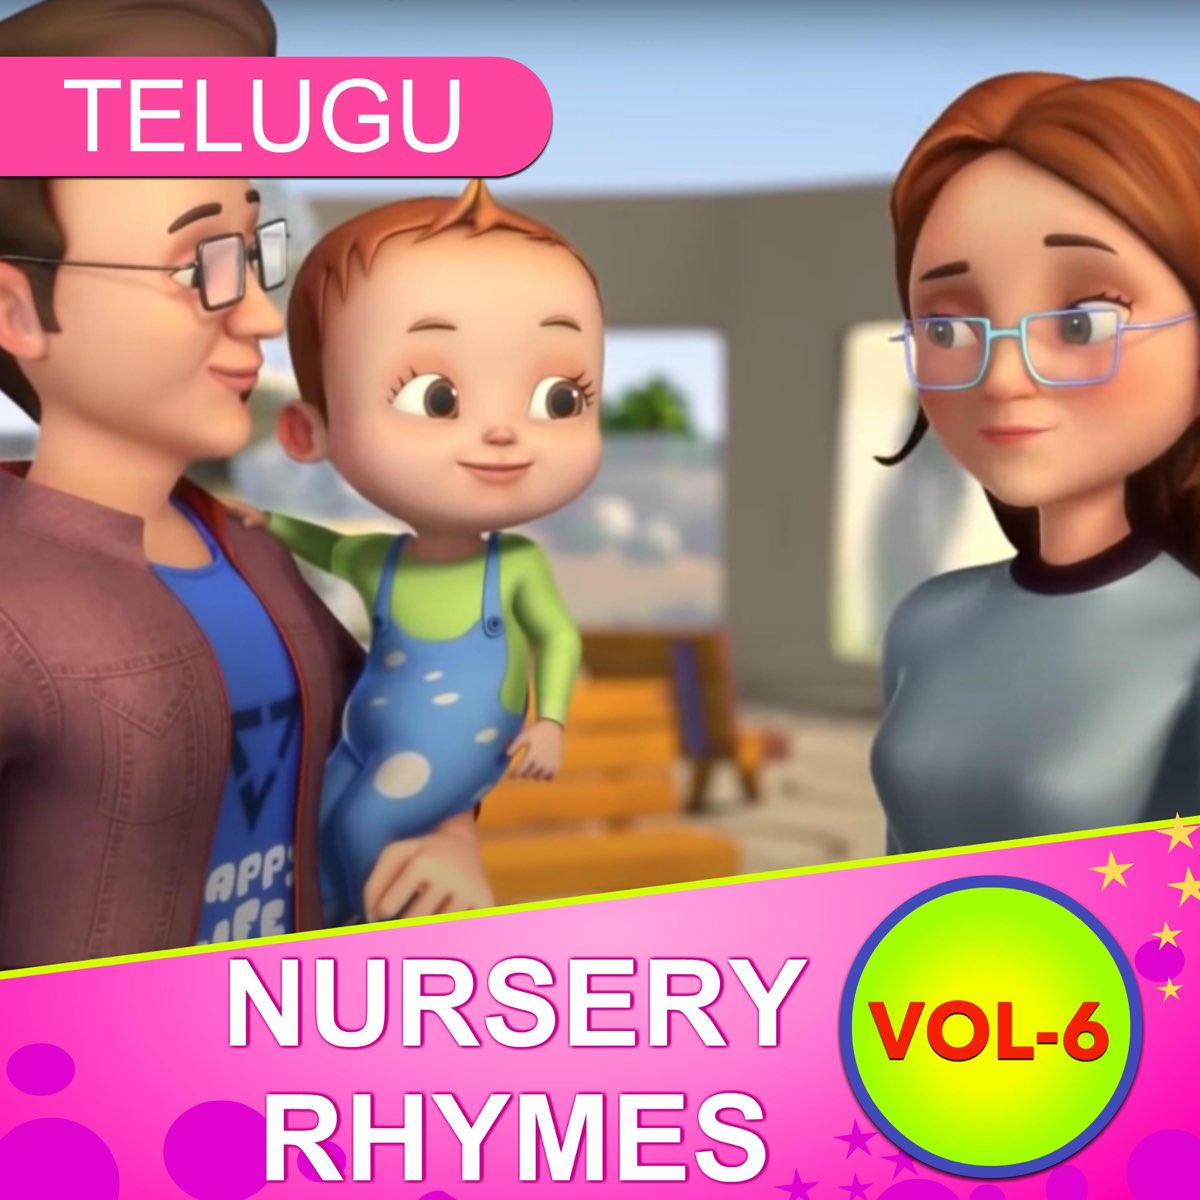 Baby Ronnie Nursery Rhymes in Telugu for Children, Vol. 6 by Videogyan  Nursery Rhymes on Apple Music